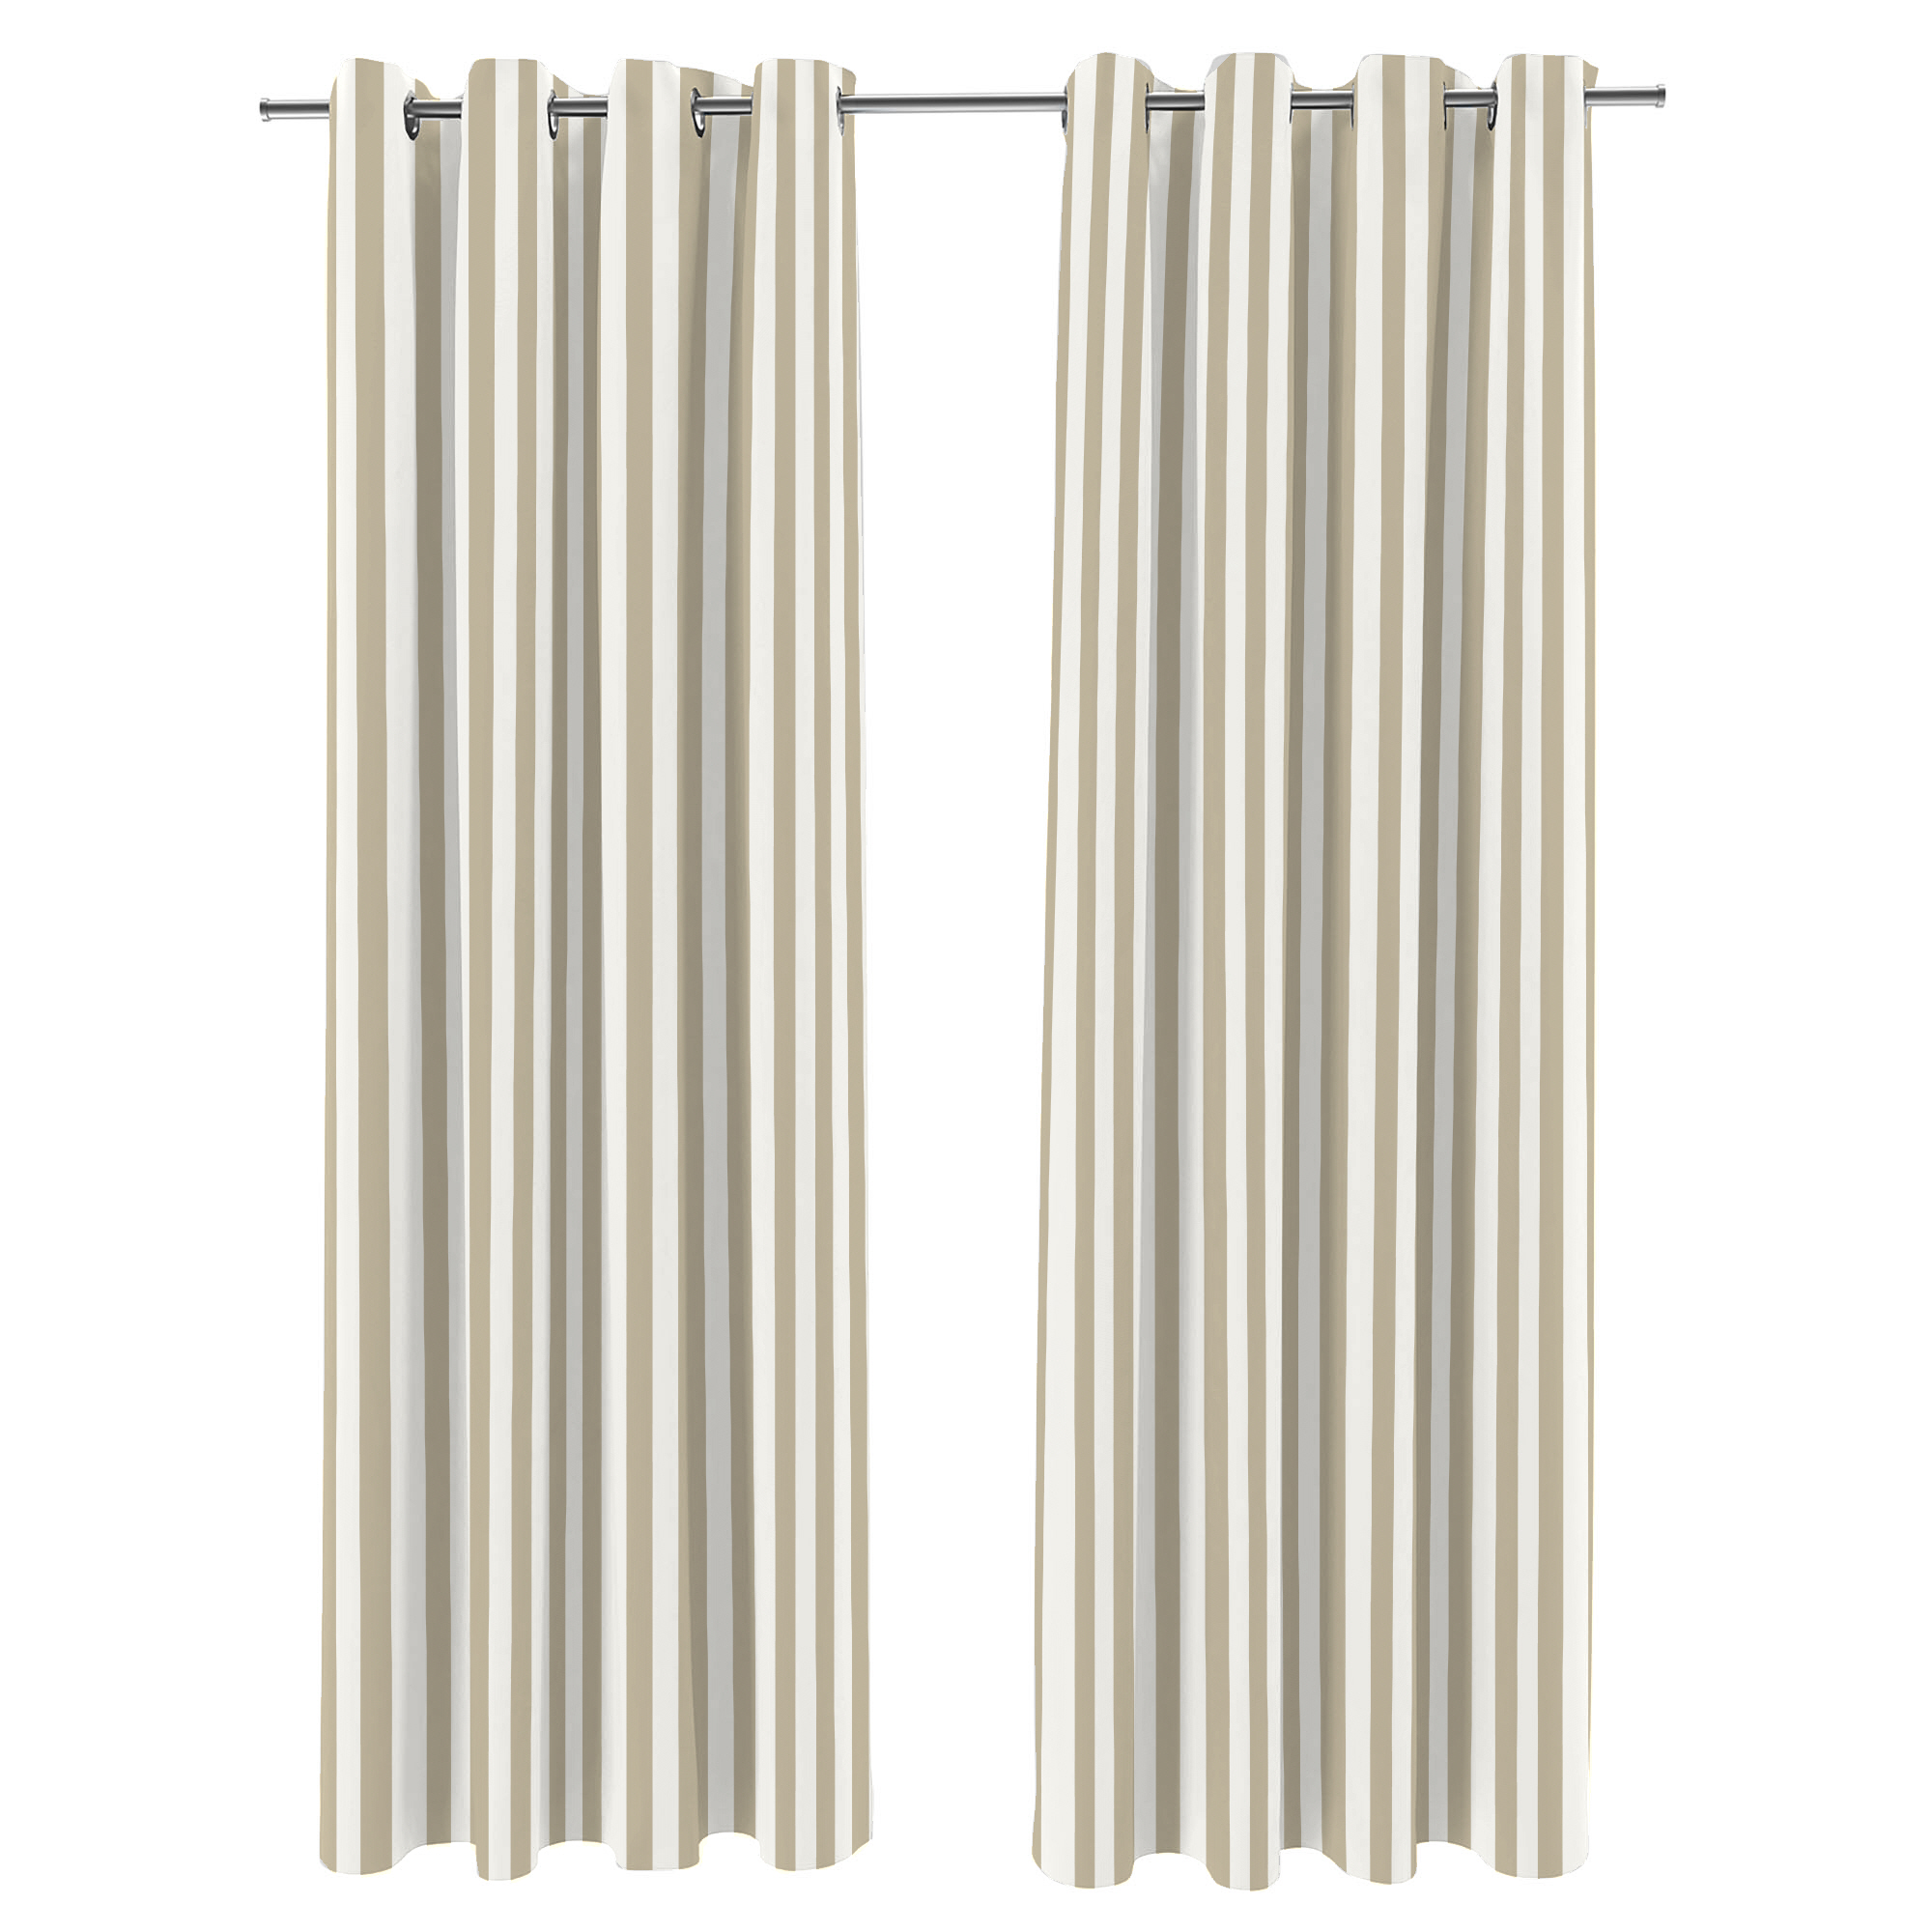 Jordan Manufacturing 54" x 84" Natural Stripe Grommet Semi-sheer Outdoor Curtain Panel (2 Pack) - image 1 of 6